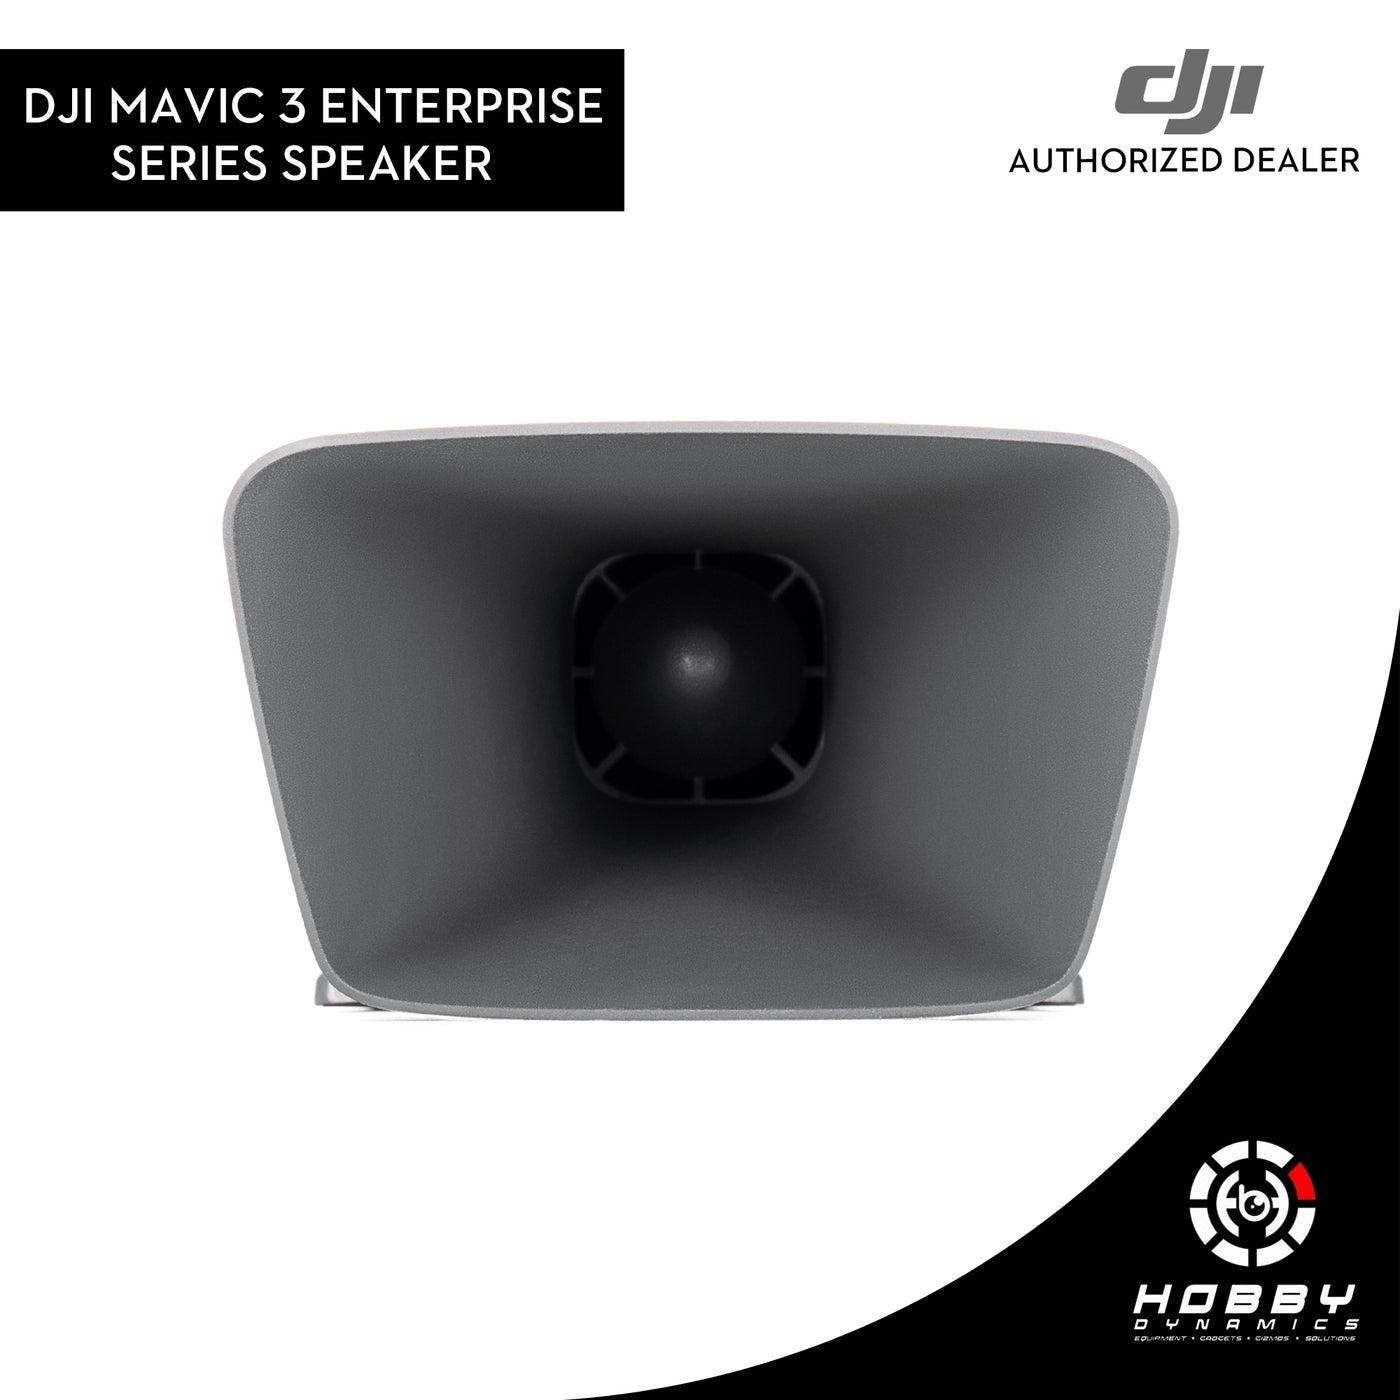 DJI Mavic 3 Enterprise Series Speaker